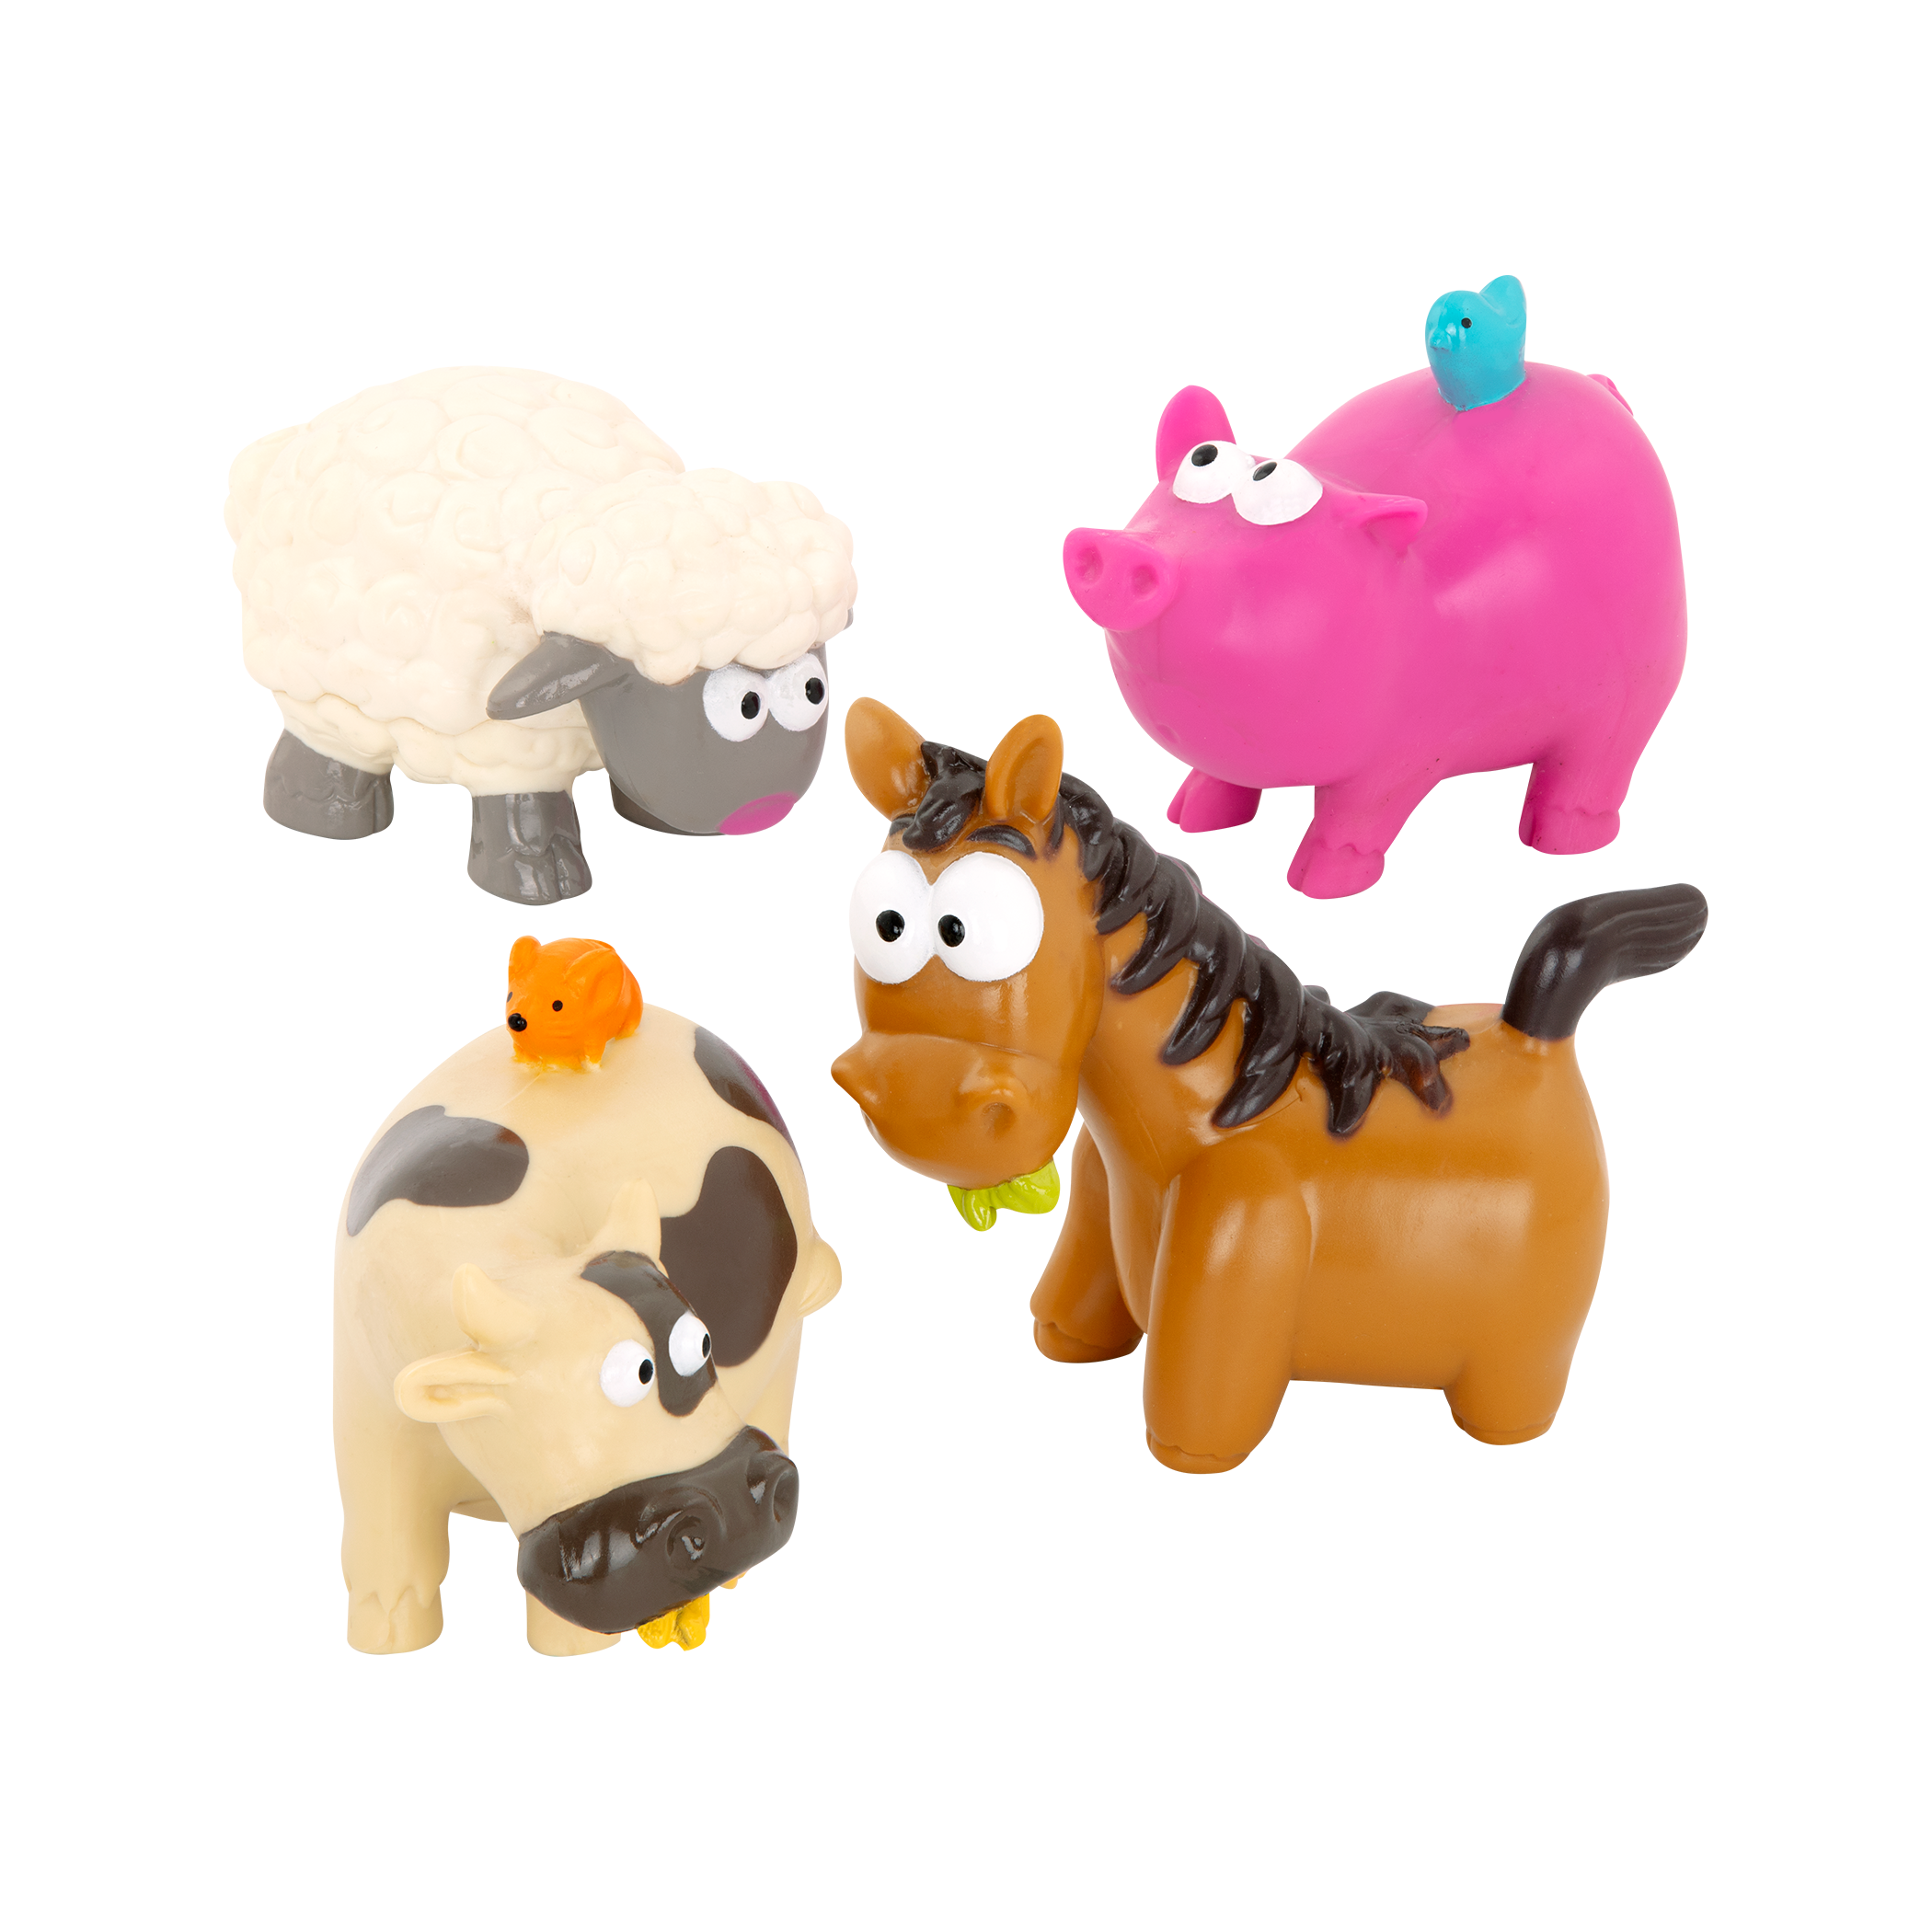 Musical Fun Farm | Barn Playset & Farm Animals | B. toys